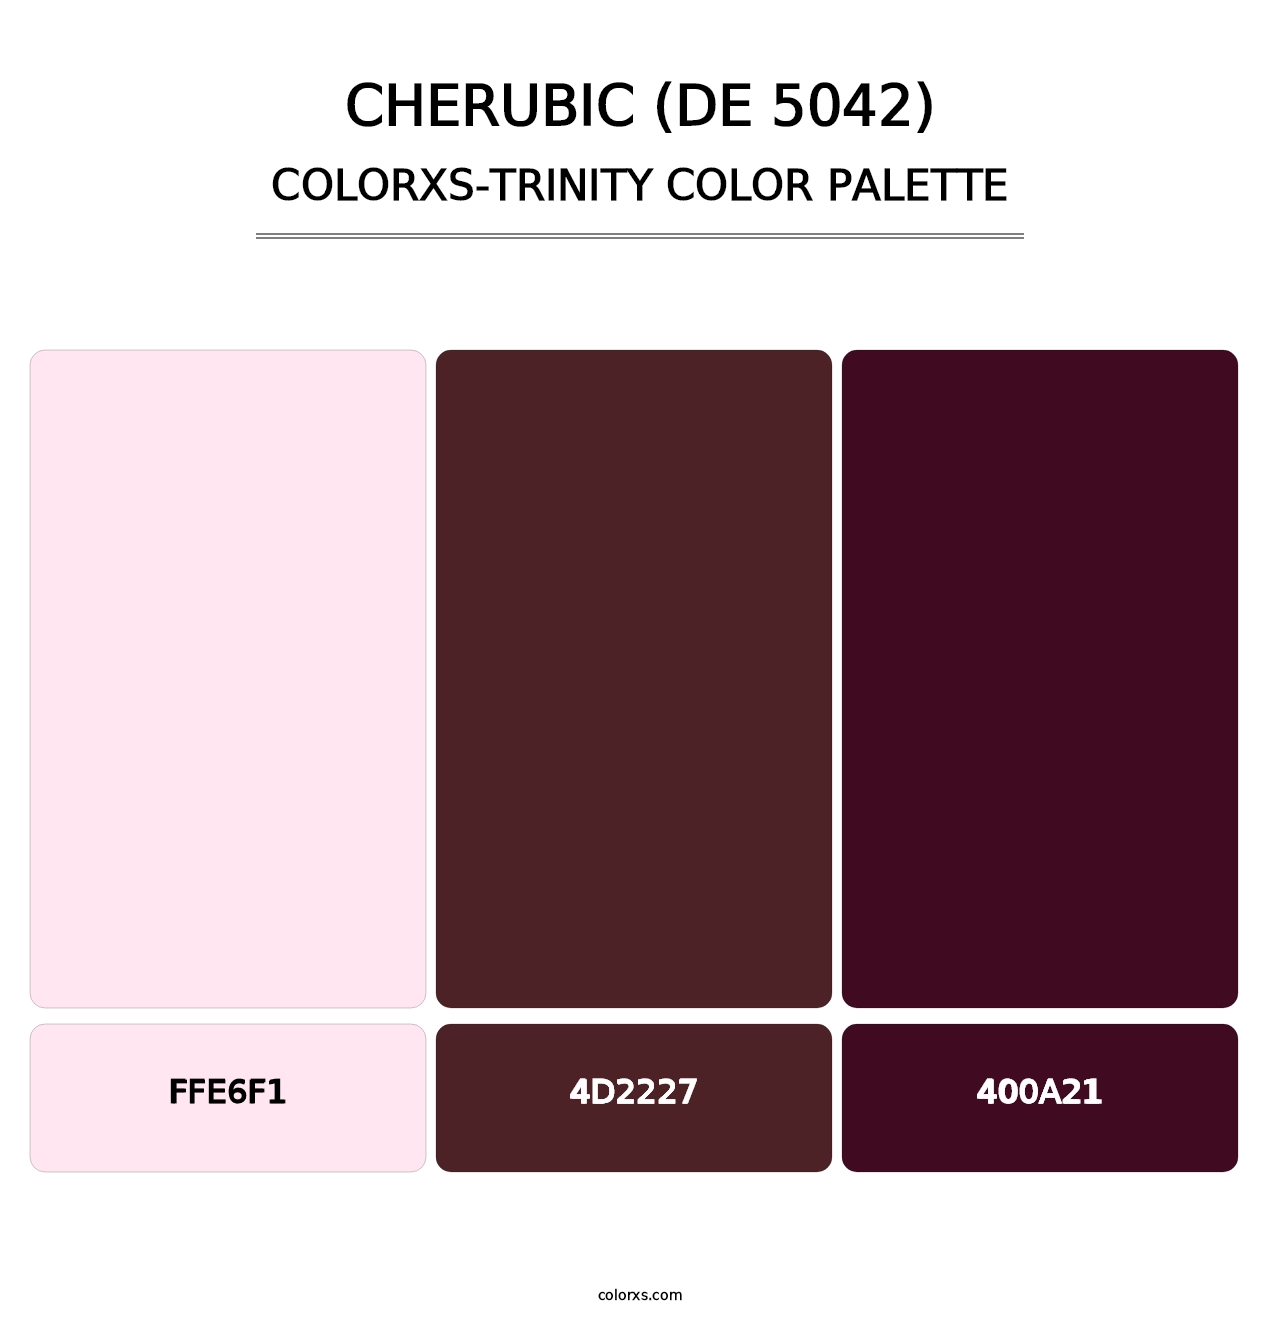 Cherubic (DE 5042) - Colorxs Trinity Palette